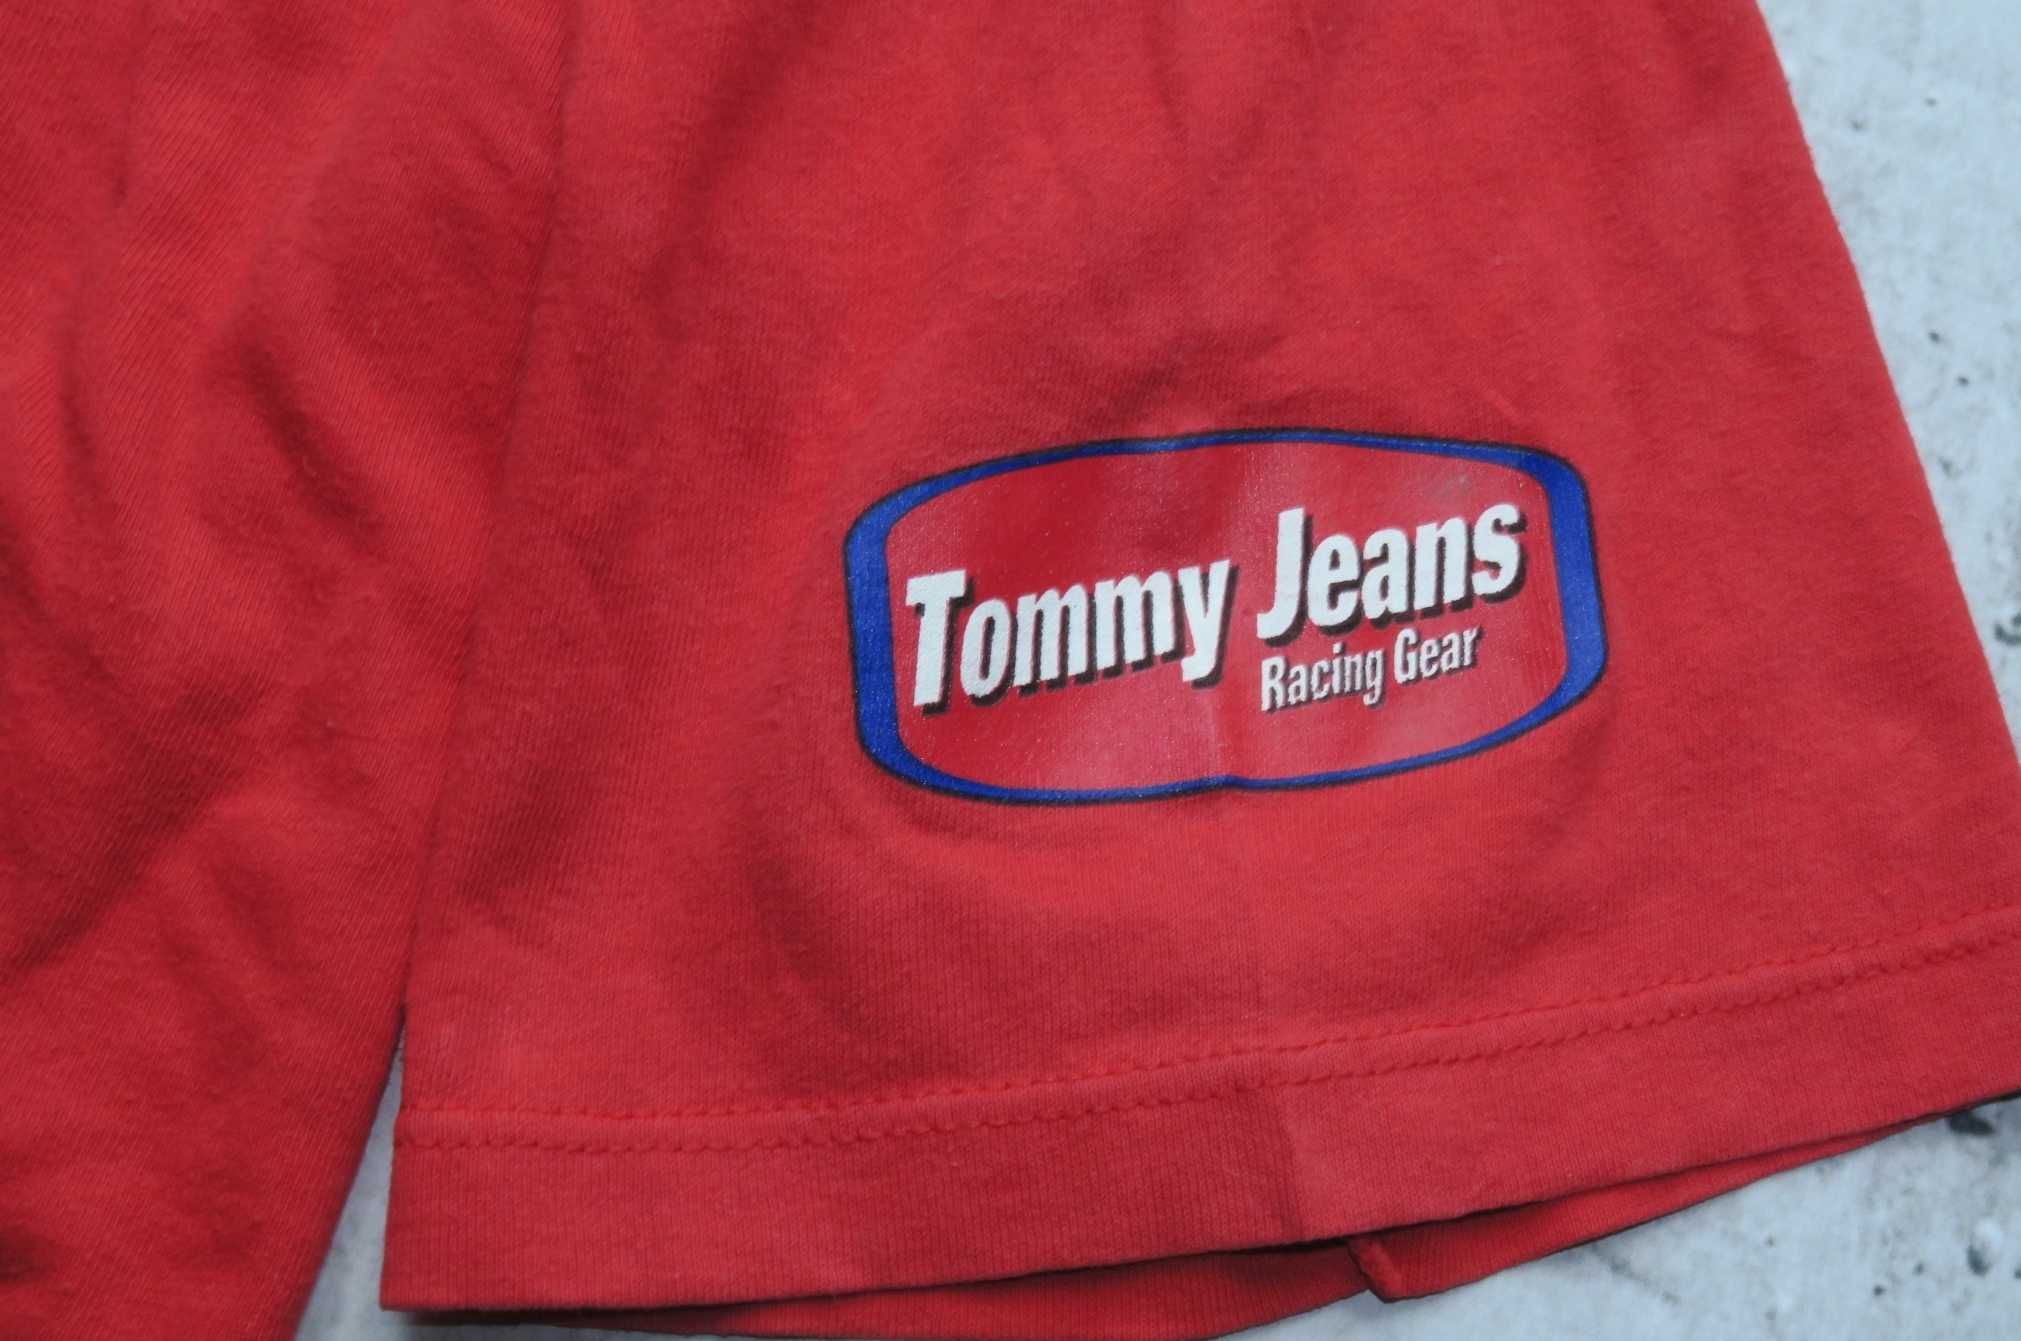 Tommy hilfiger vintage t-shirt authentic racing gear L